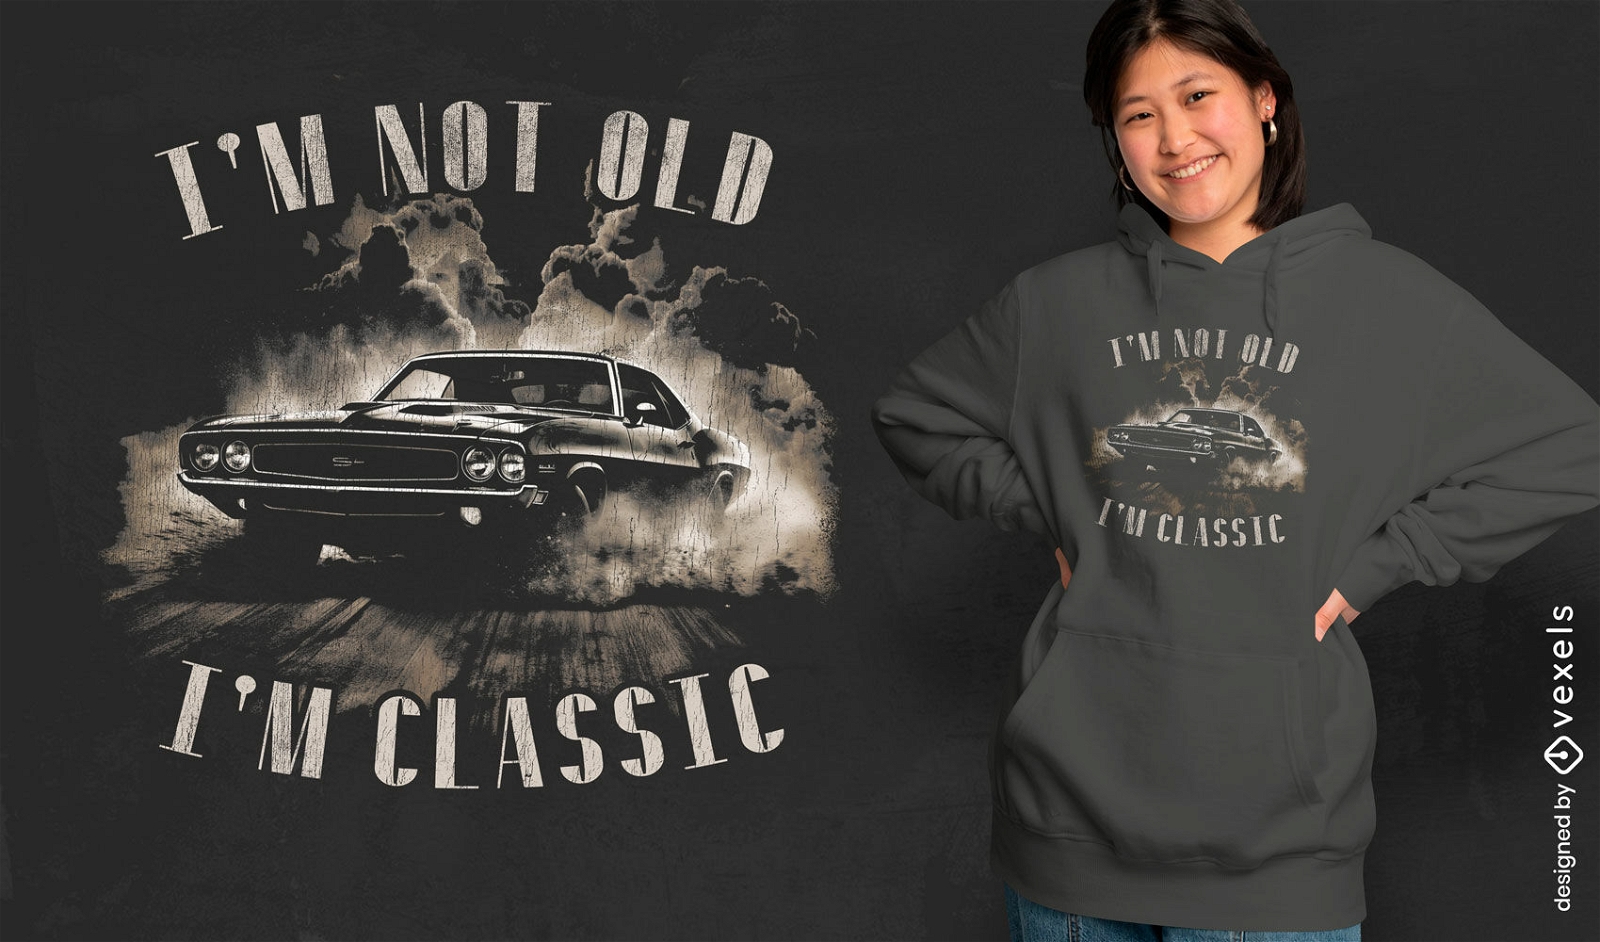 Diseño de camiseta divertido con cita de coche clásico.